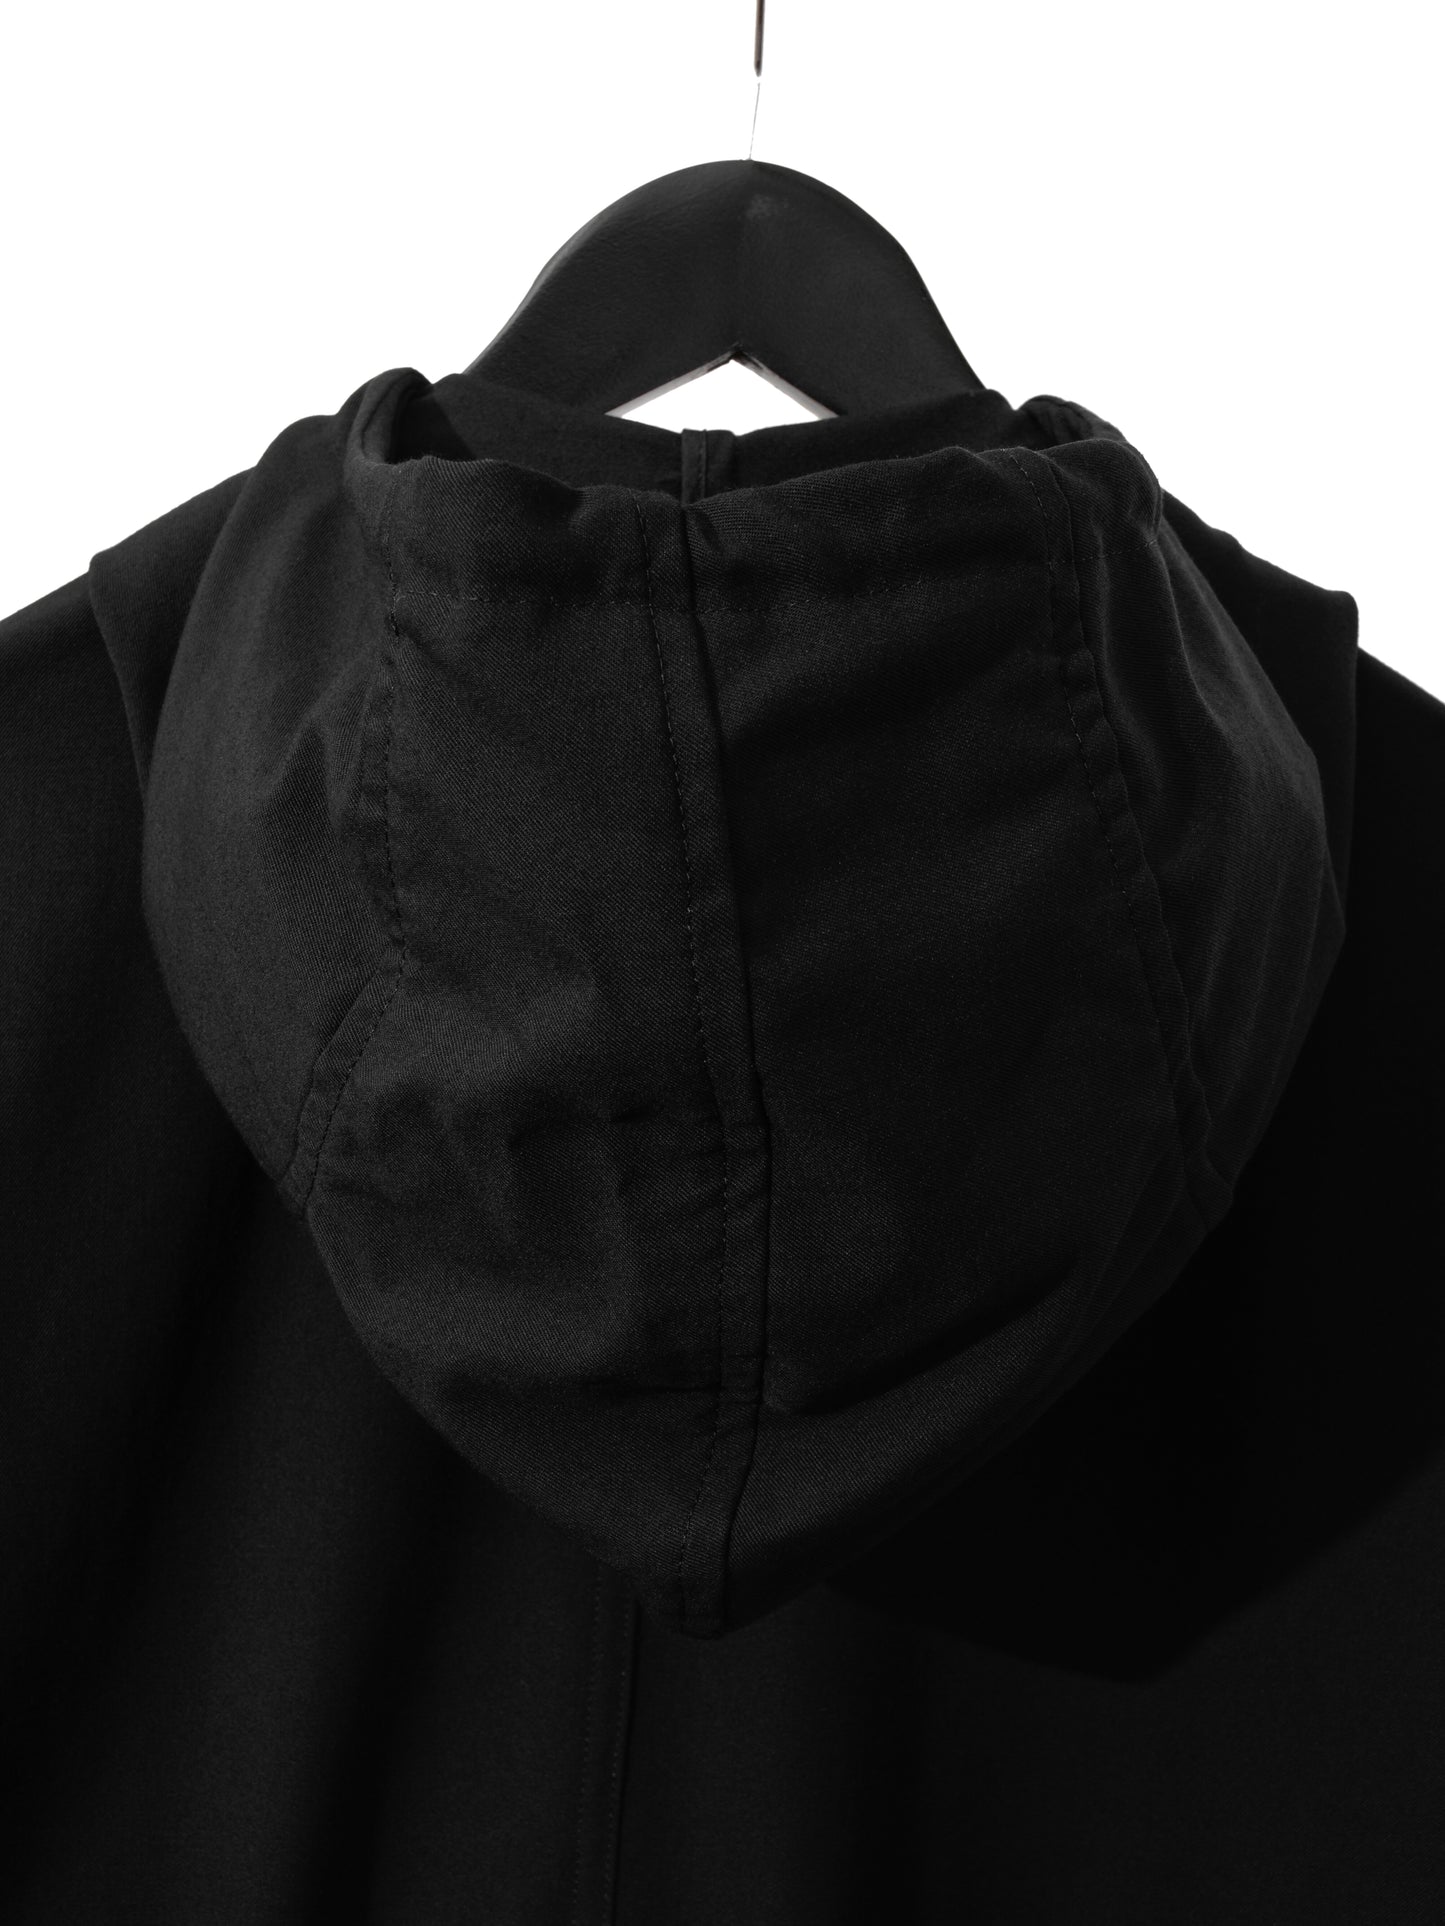 hooded field jacket black ∙ wool ∙ medium